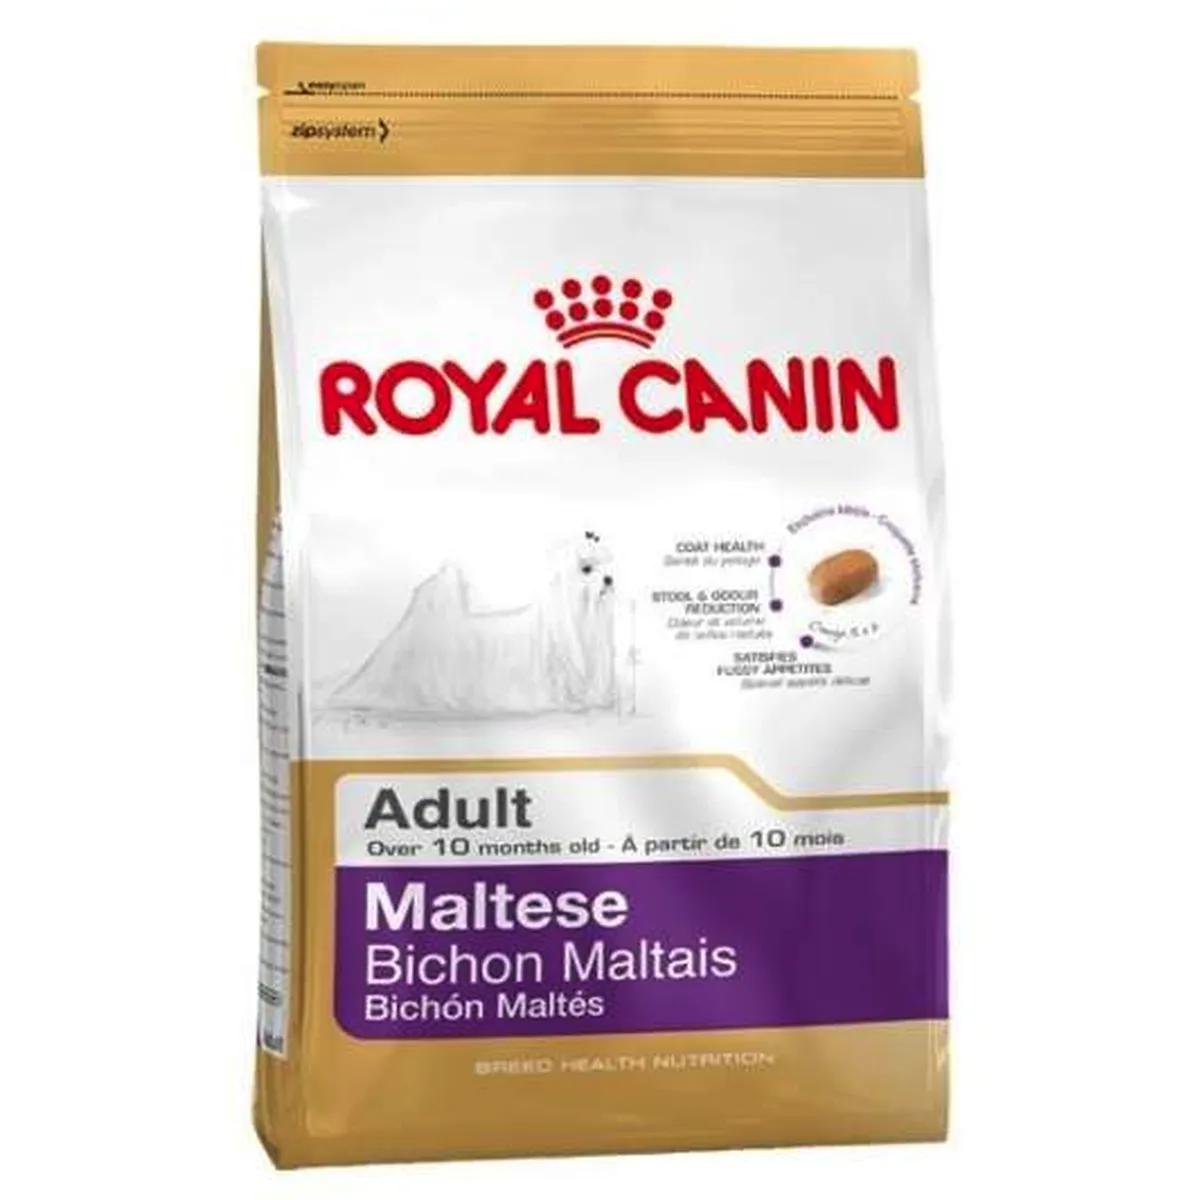 Royal Canin Maltese 24 Adult - 500 g